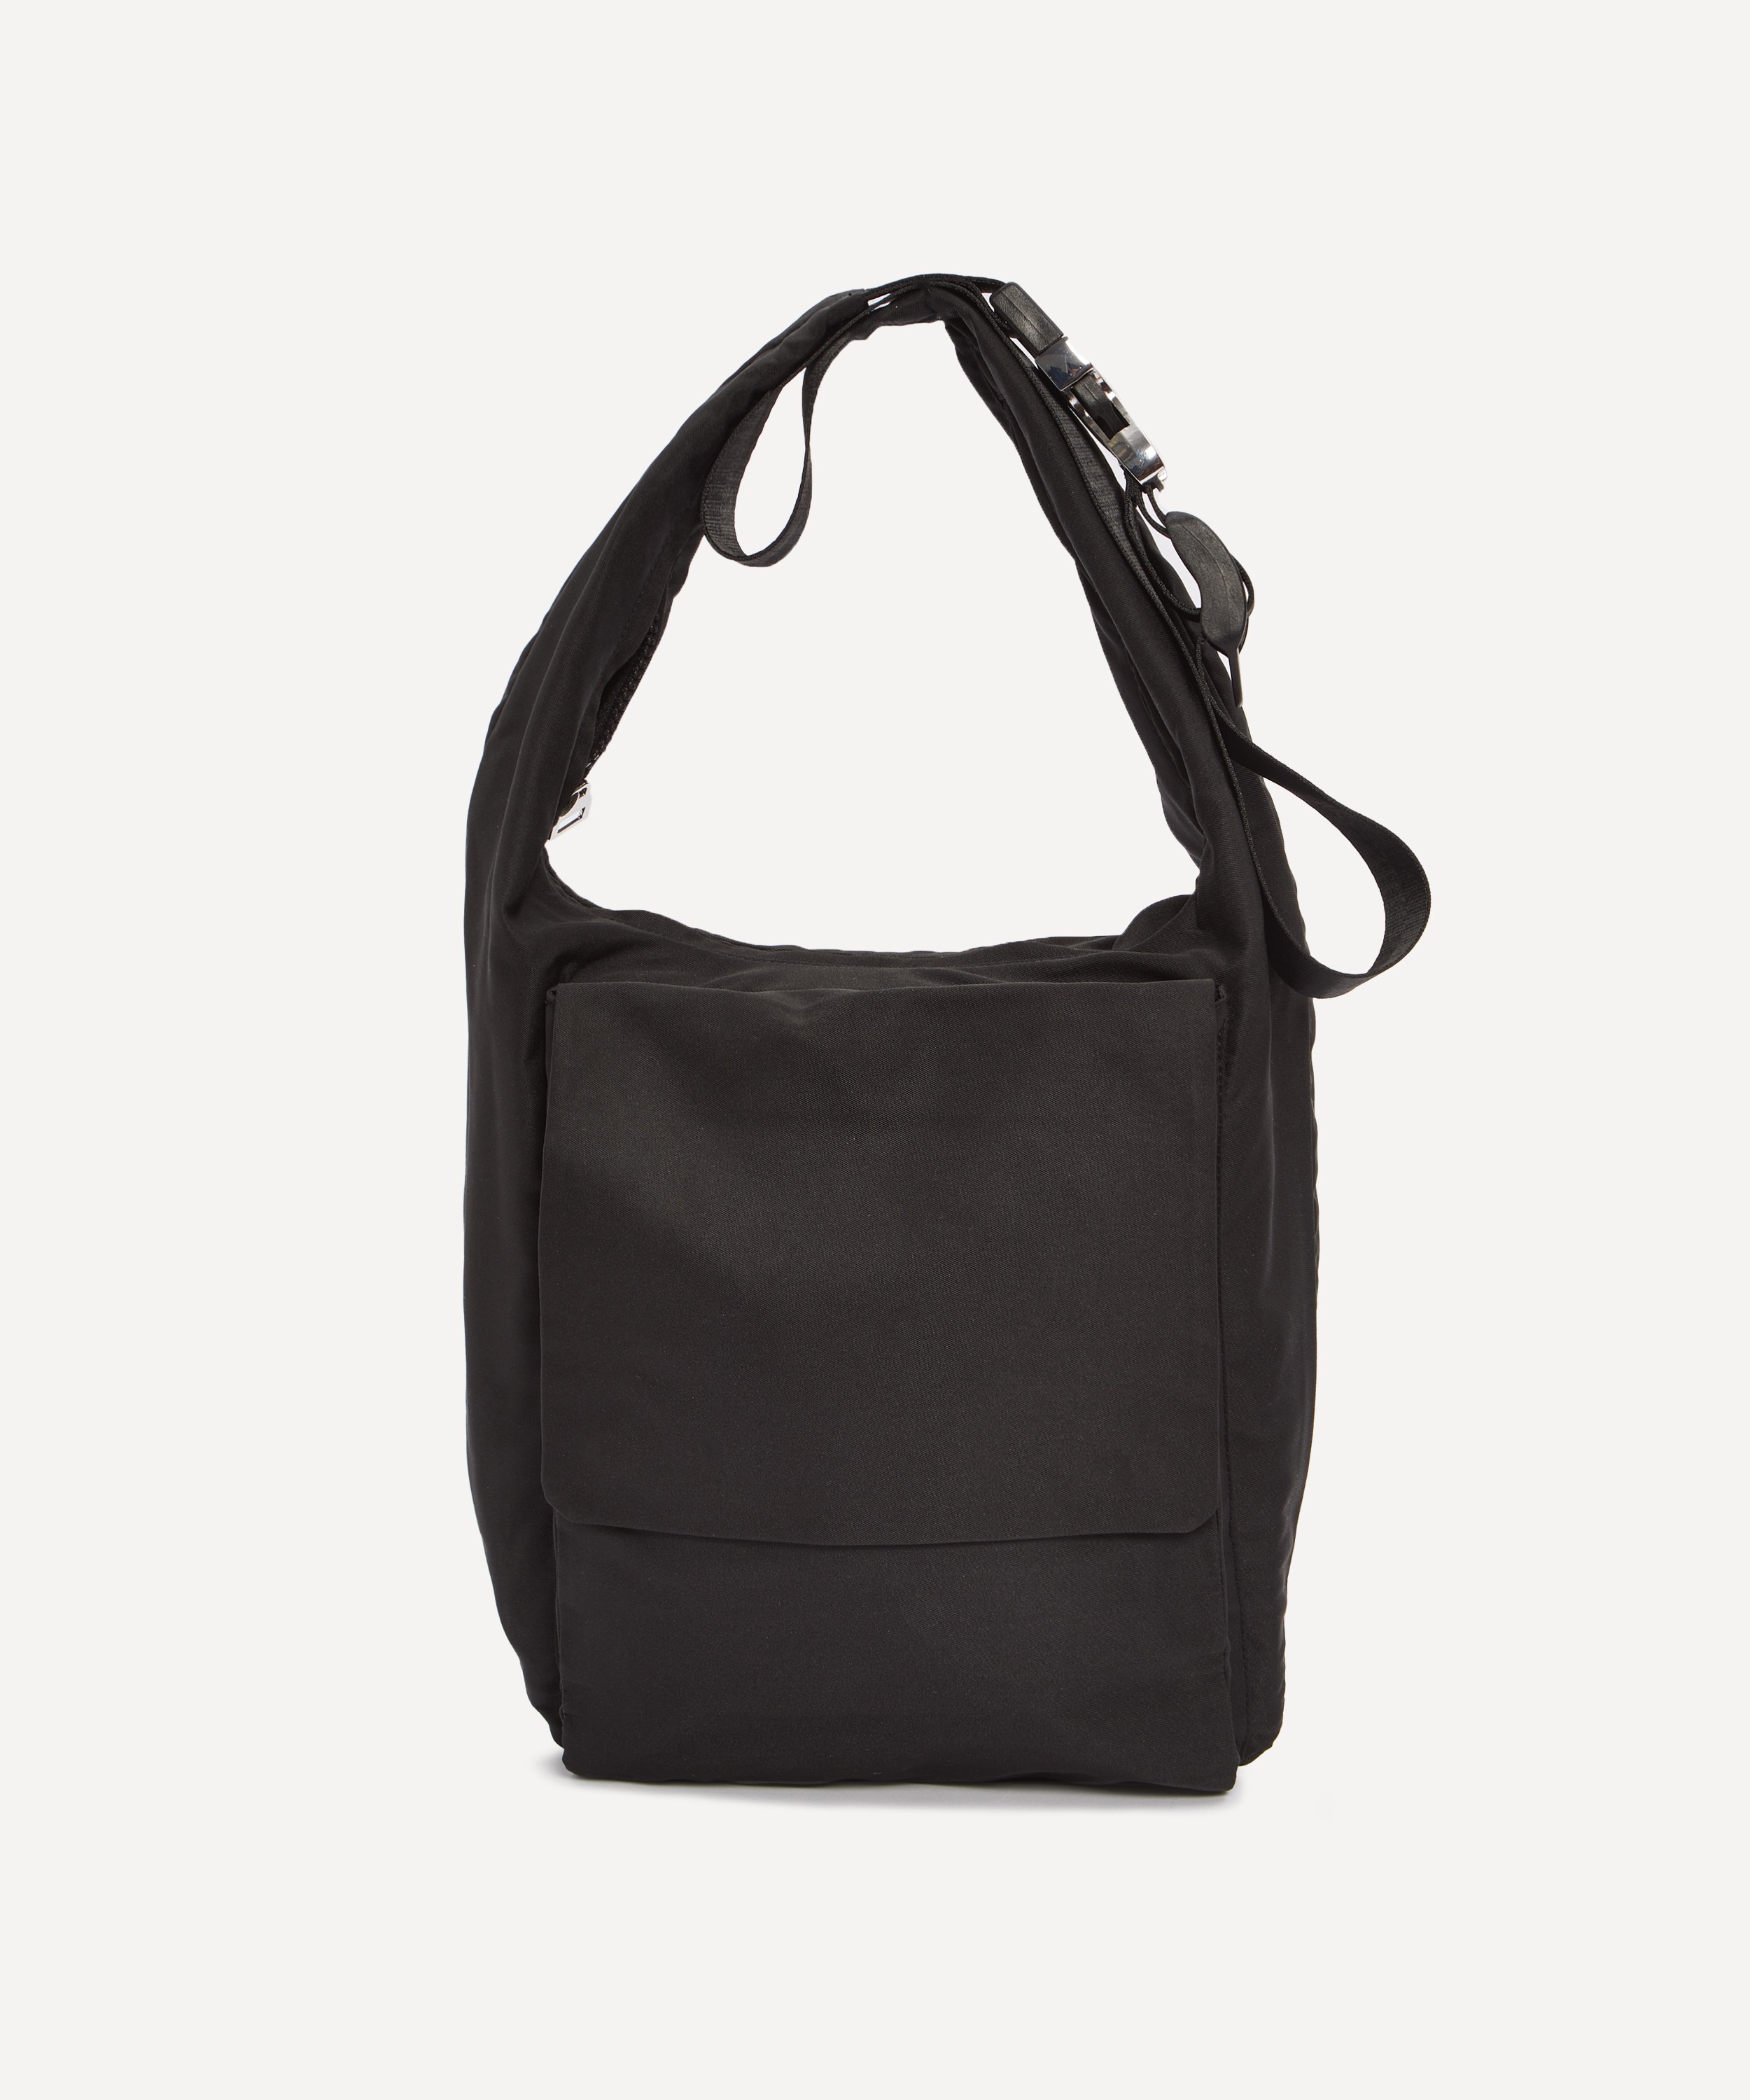 Women's Nylon Sling Bag by Gap True Black One Size